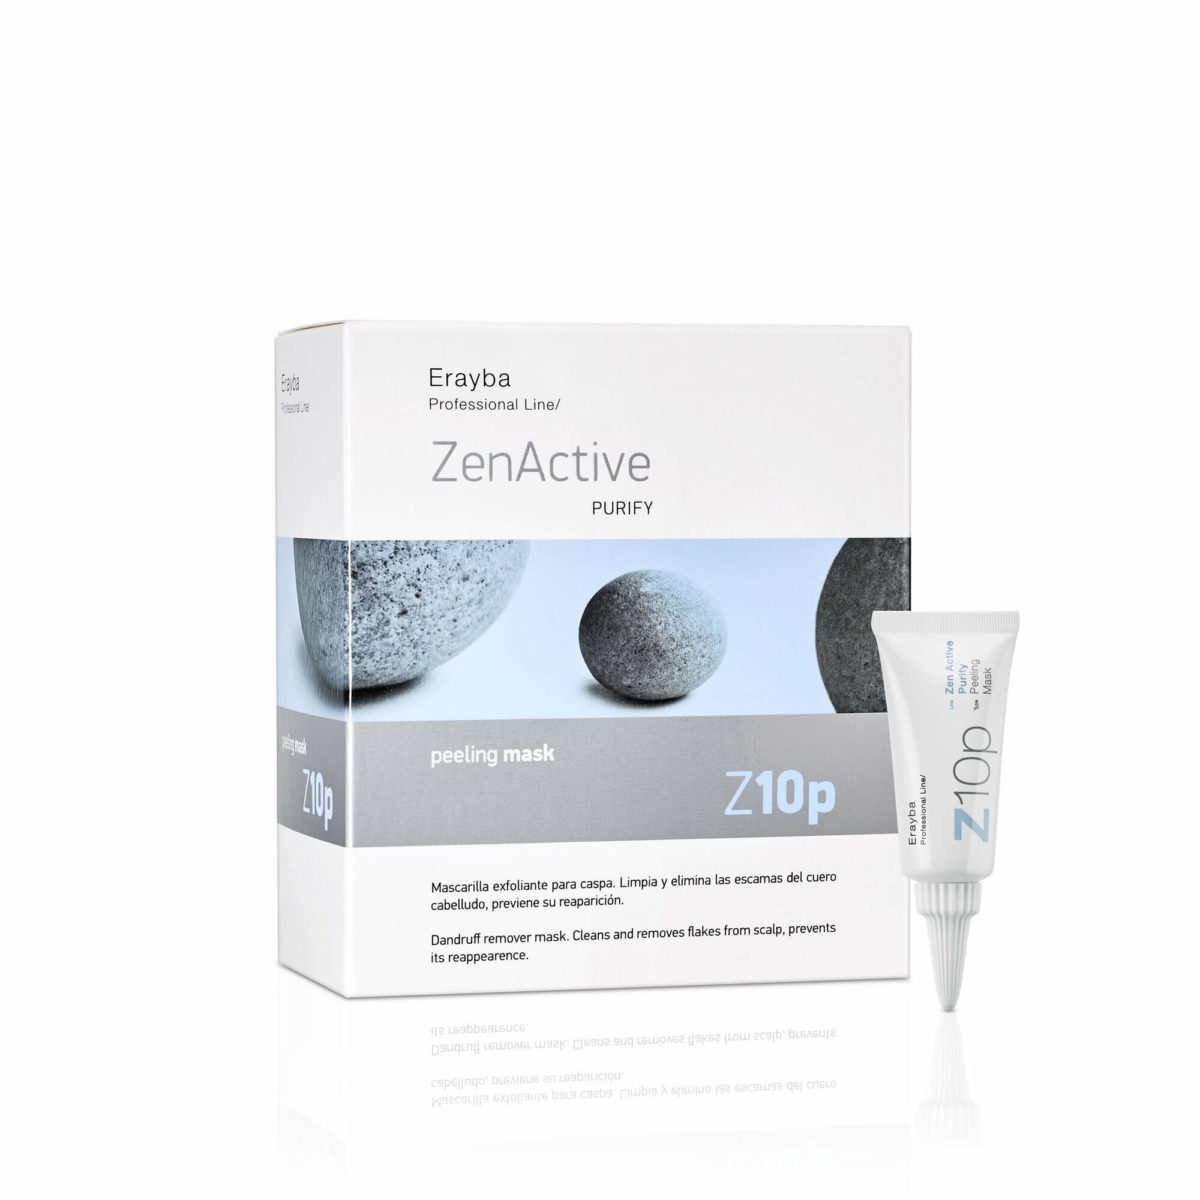 Erayba Zen Active Z10p peeling mask